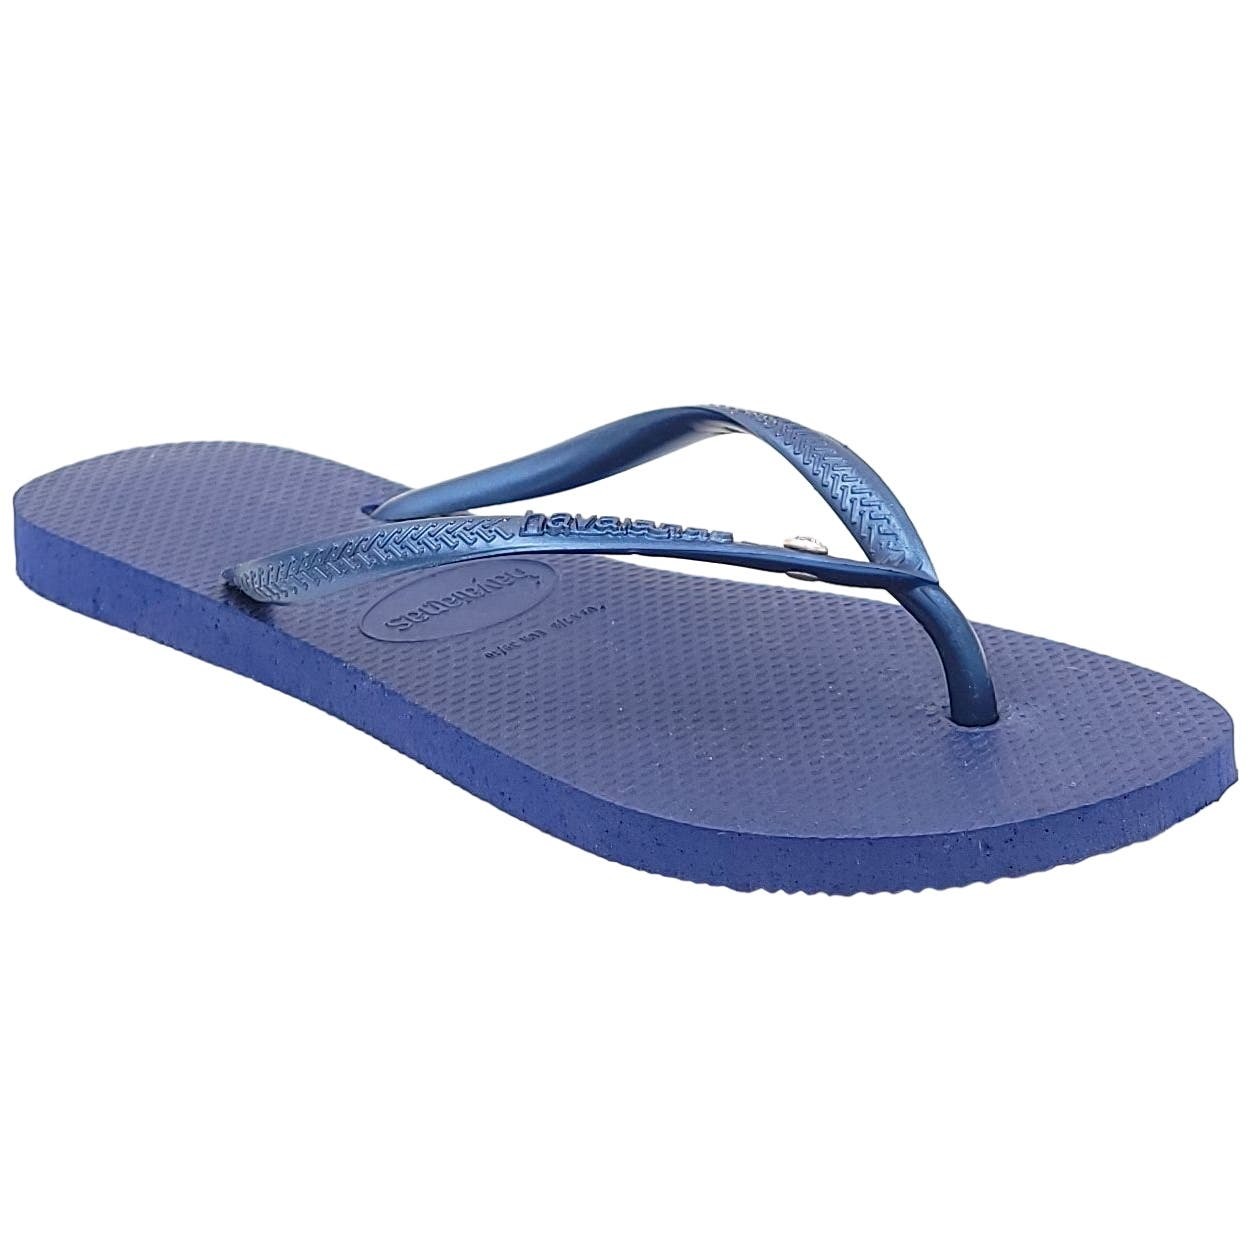 Primary image for Havaianas Women Flip Flop Sandals Slim Crystal SW II Size US 7/8 Navy Blue